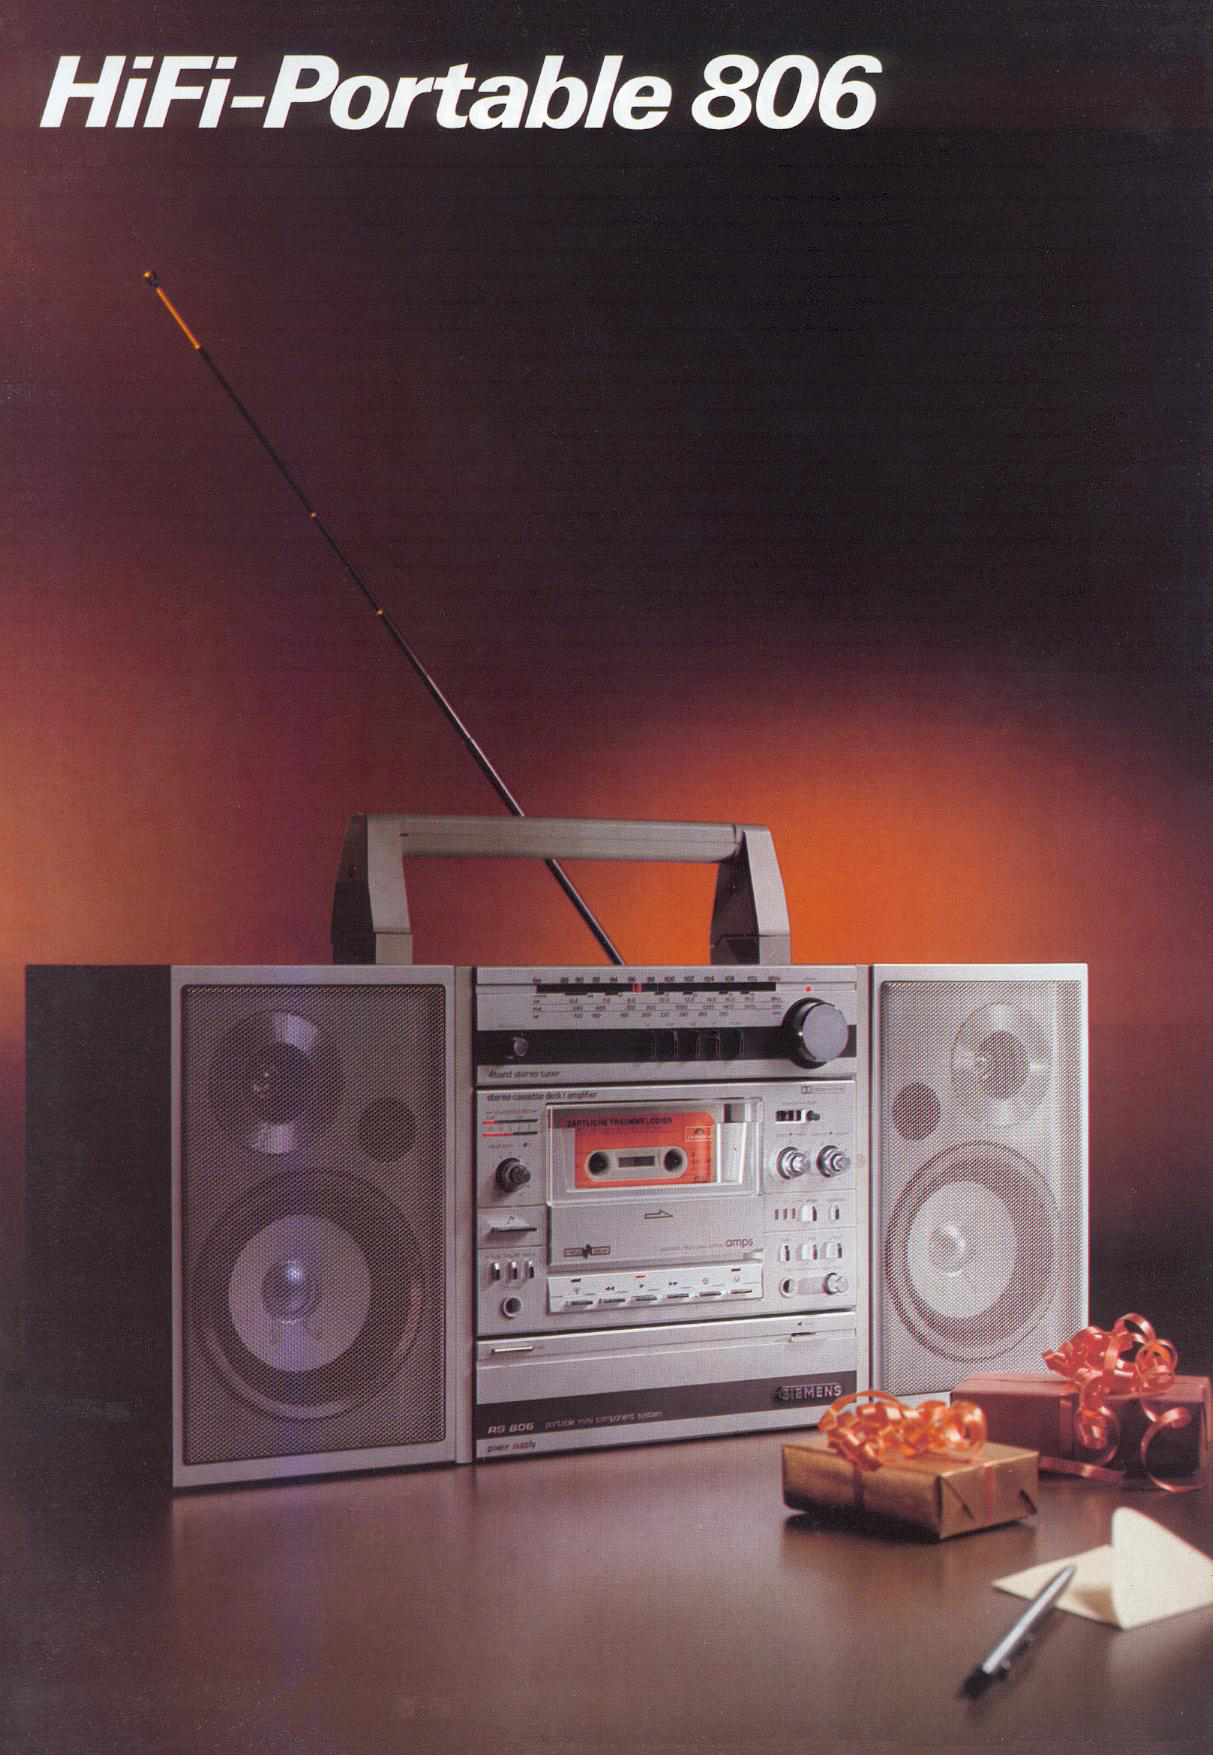 Siemens Hifi-Portable RS-806-Prospekt-1982.jpg